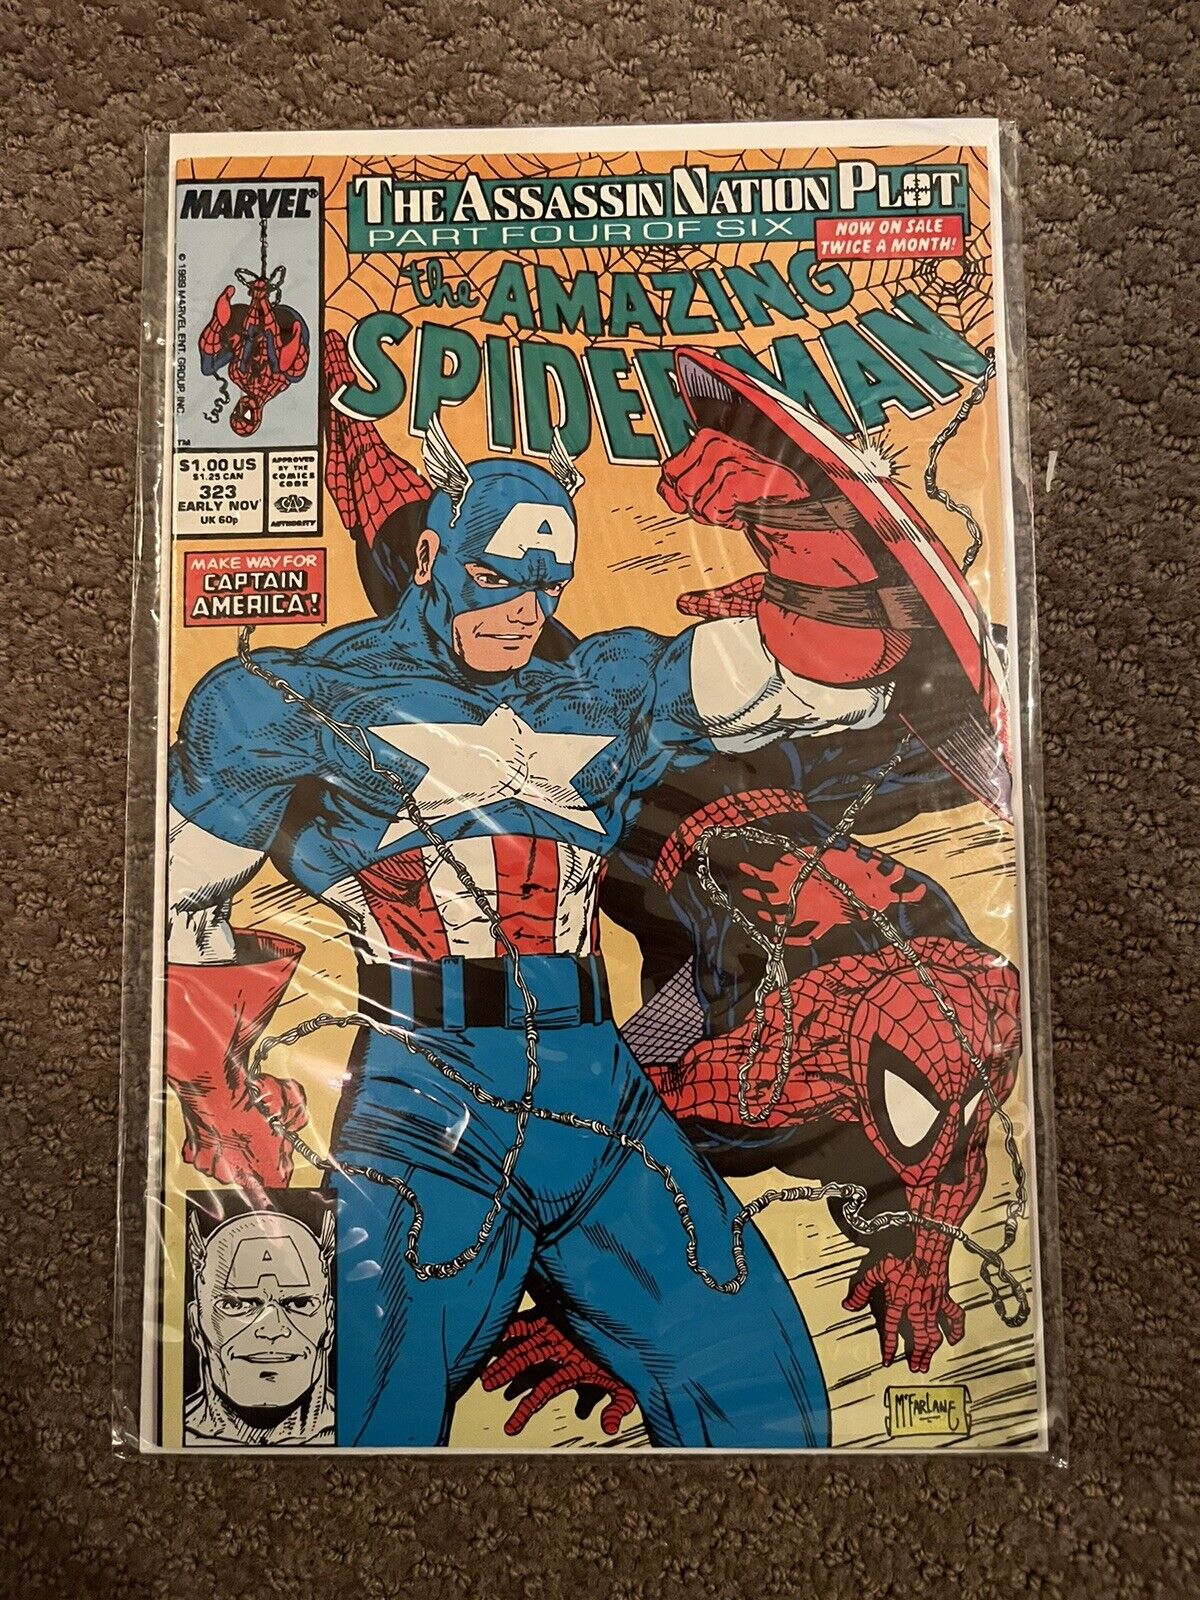 The Amazing Spider-Man 323 (9.2)